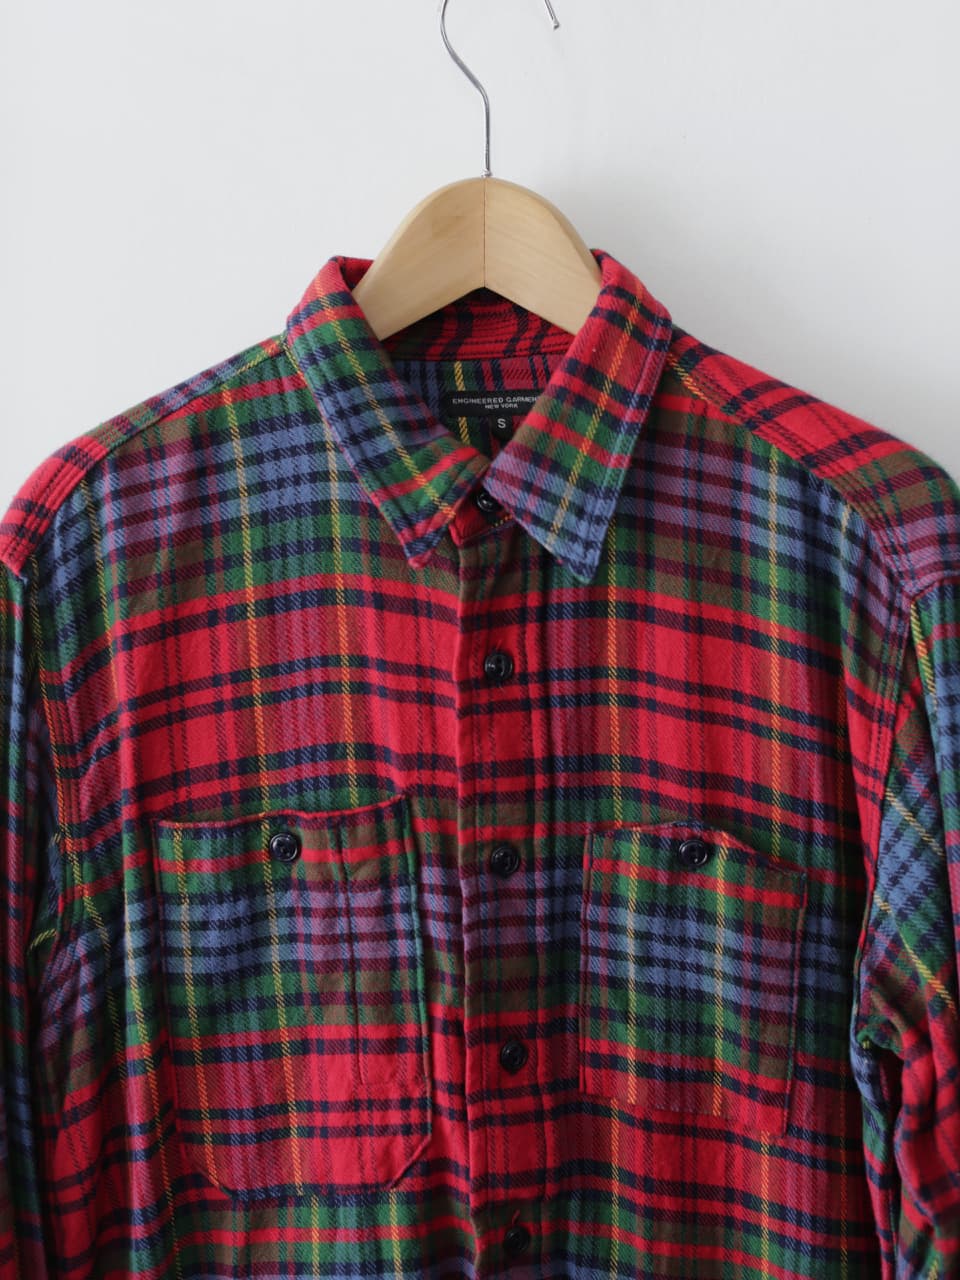 Work Shirt - Twill Plaid Navy/Red/Green 4